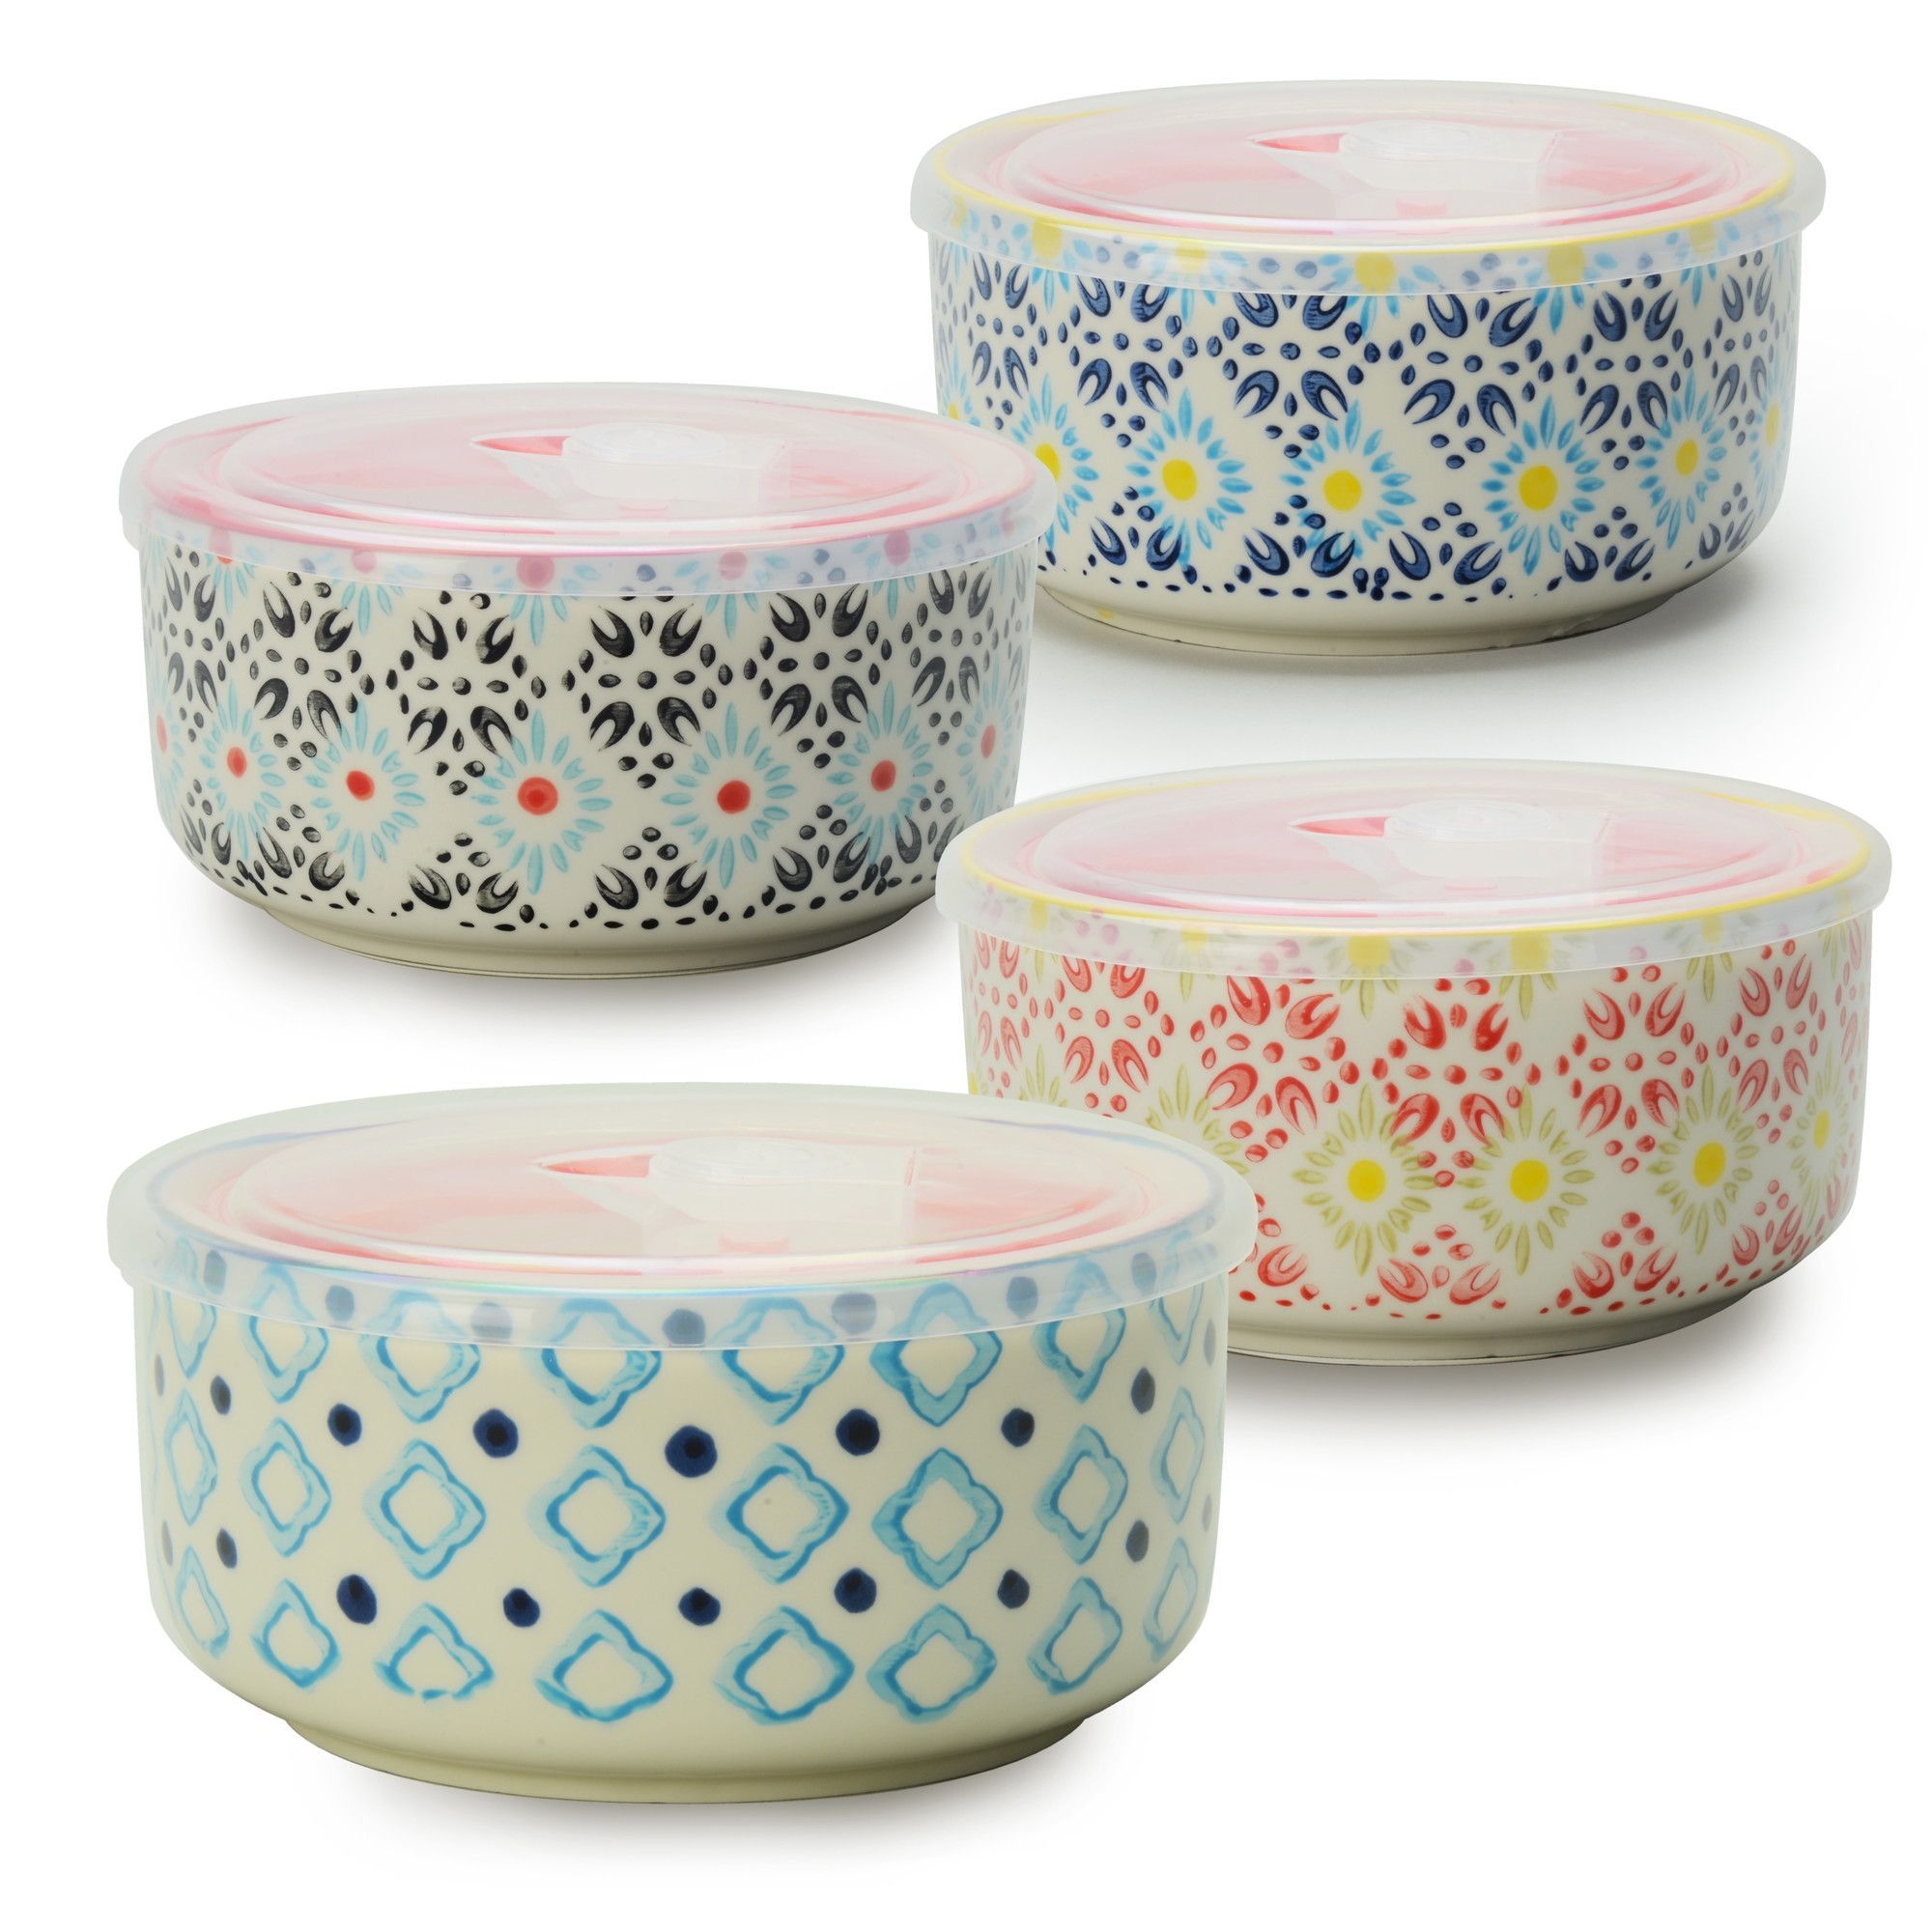 https://visualhunt.com/photos/12/hot-sale-signature-housewares-ceramic-serving-bowl-with.jpg